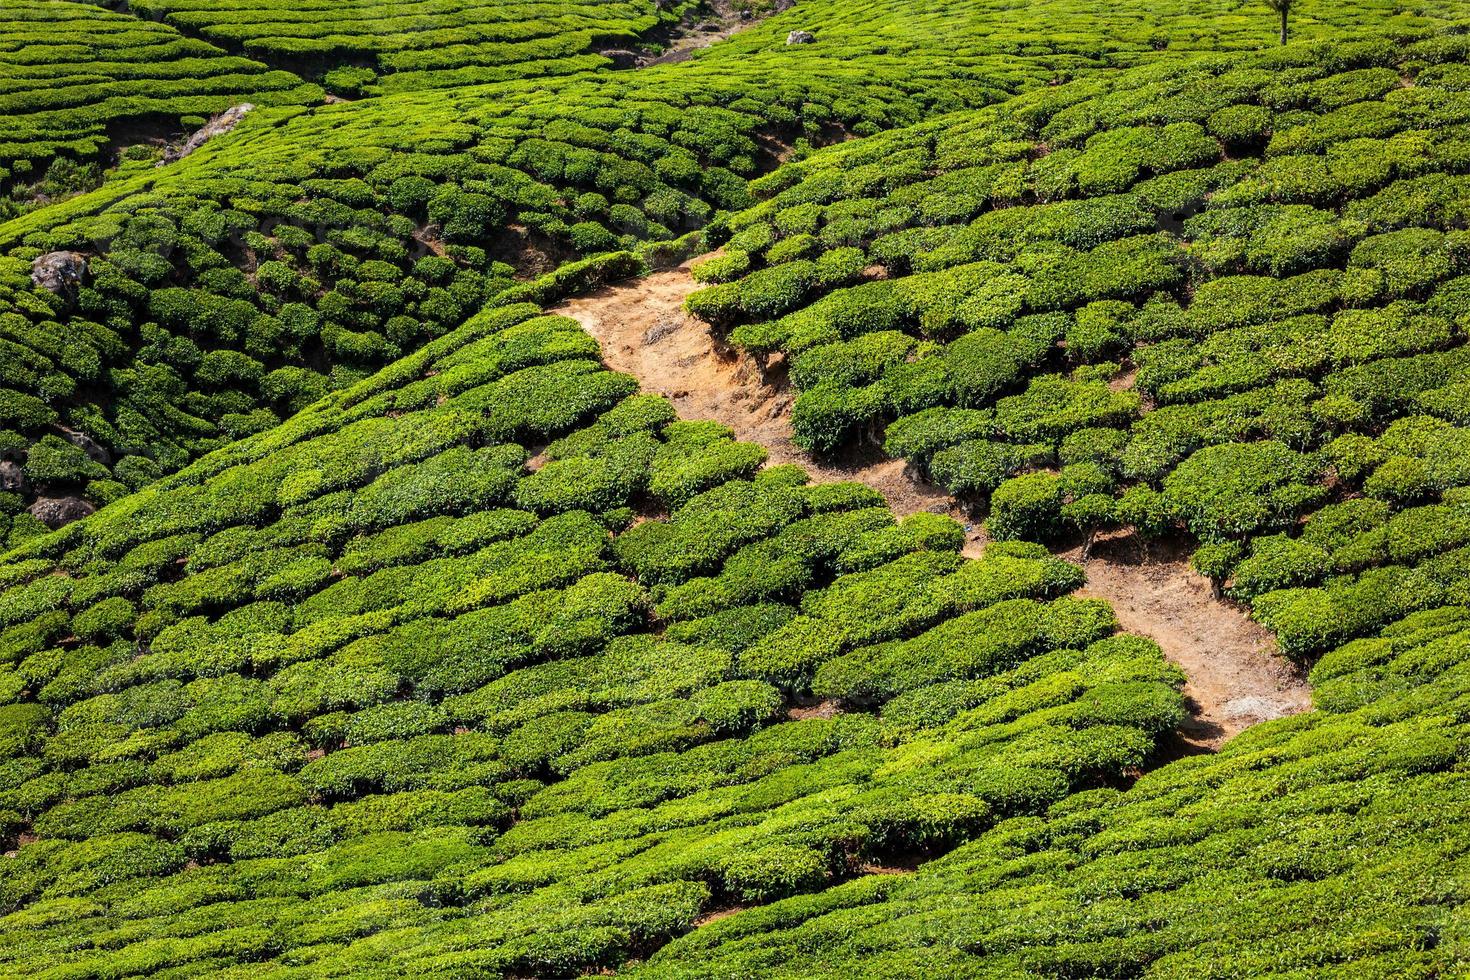 Munnar - Tea Plantations - Summer Holiday Destinations in India